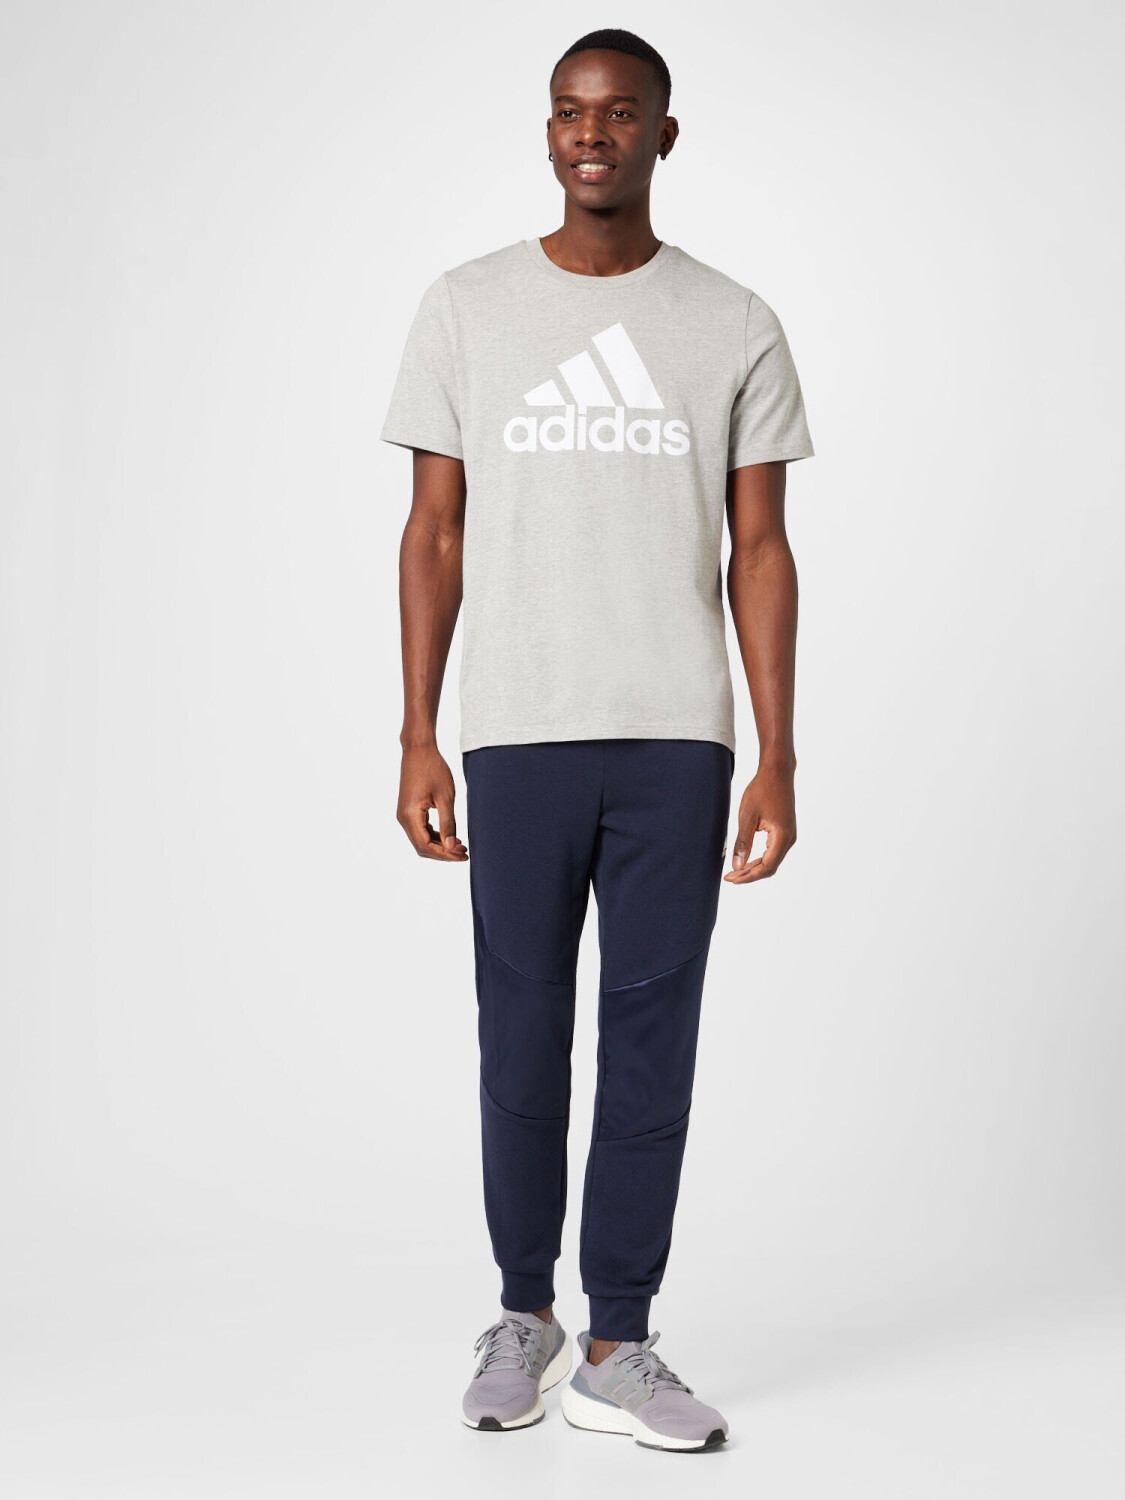 Jersey Single ab (IC9350) Adidas Logo heather grey Preisvergleich bei Essentials | T-Shirt Big 16,77 € medium